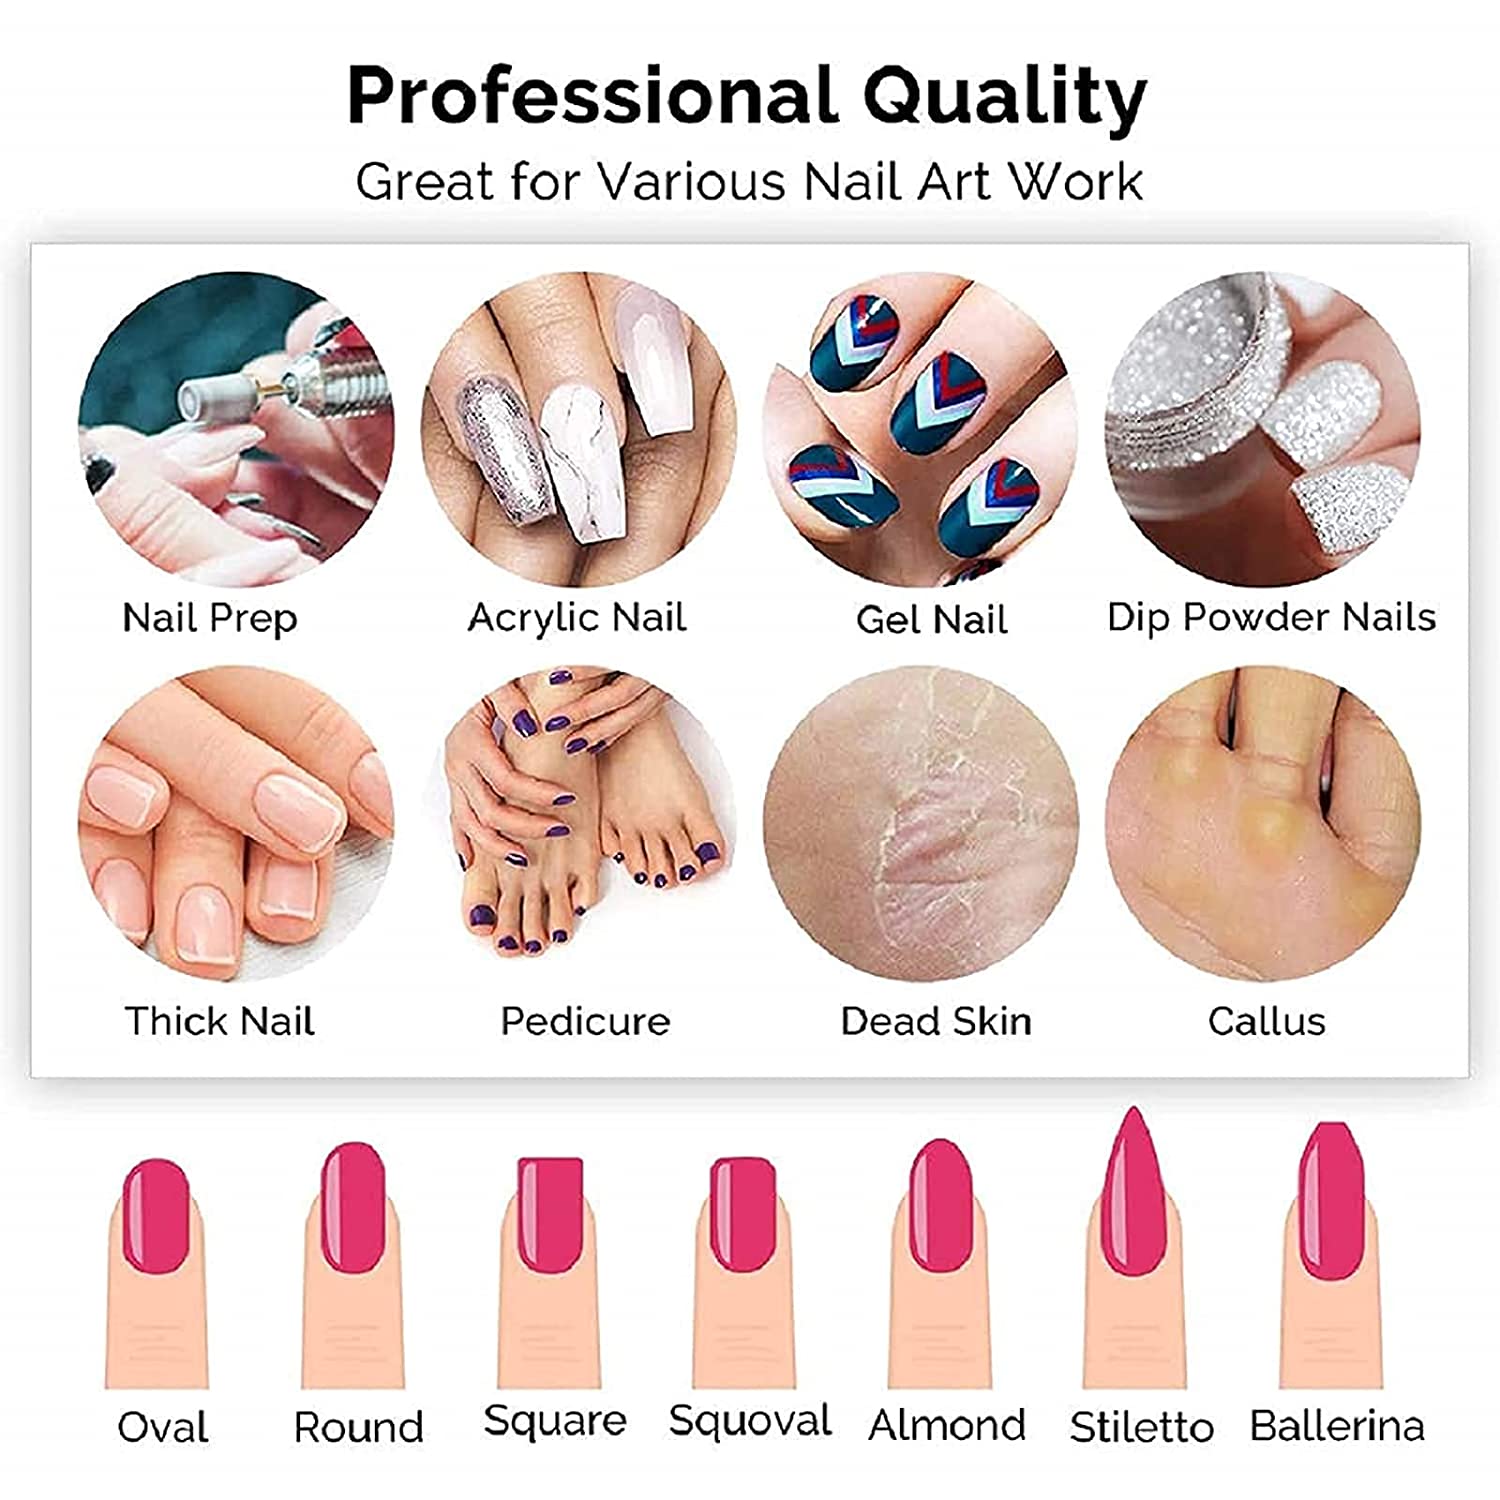 Perfect 10 Nail, UV Gel Nails, Acrylic Nails, Nail Technician, Pedicure,  Manicure, Nail Supplies, Beauty Supplies in Orillia, Ontario, Canada